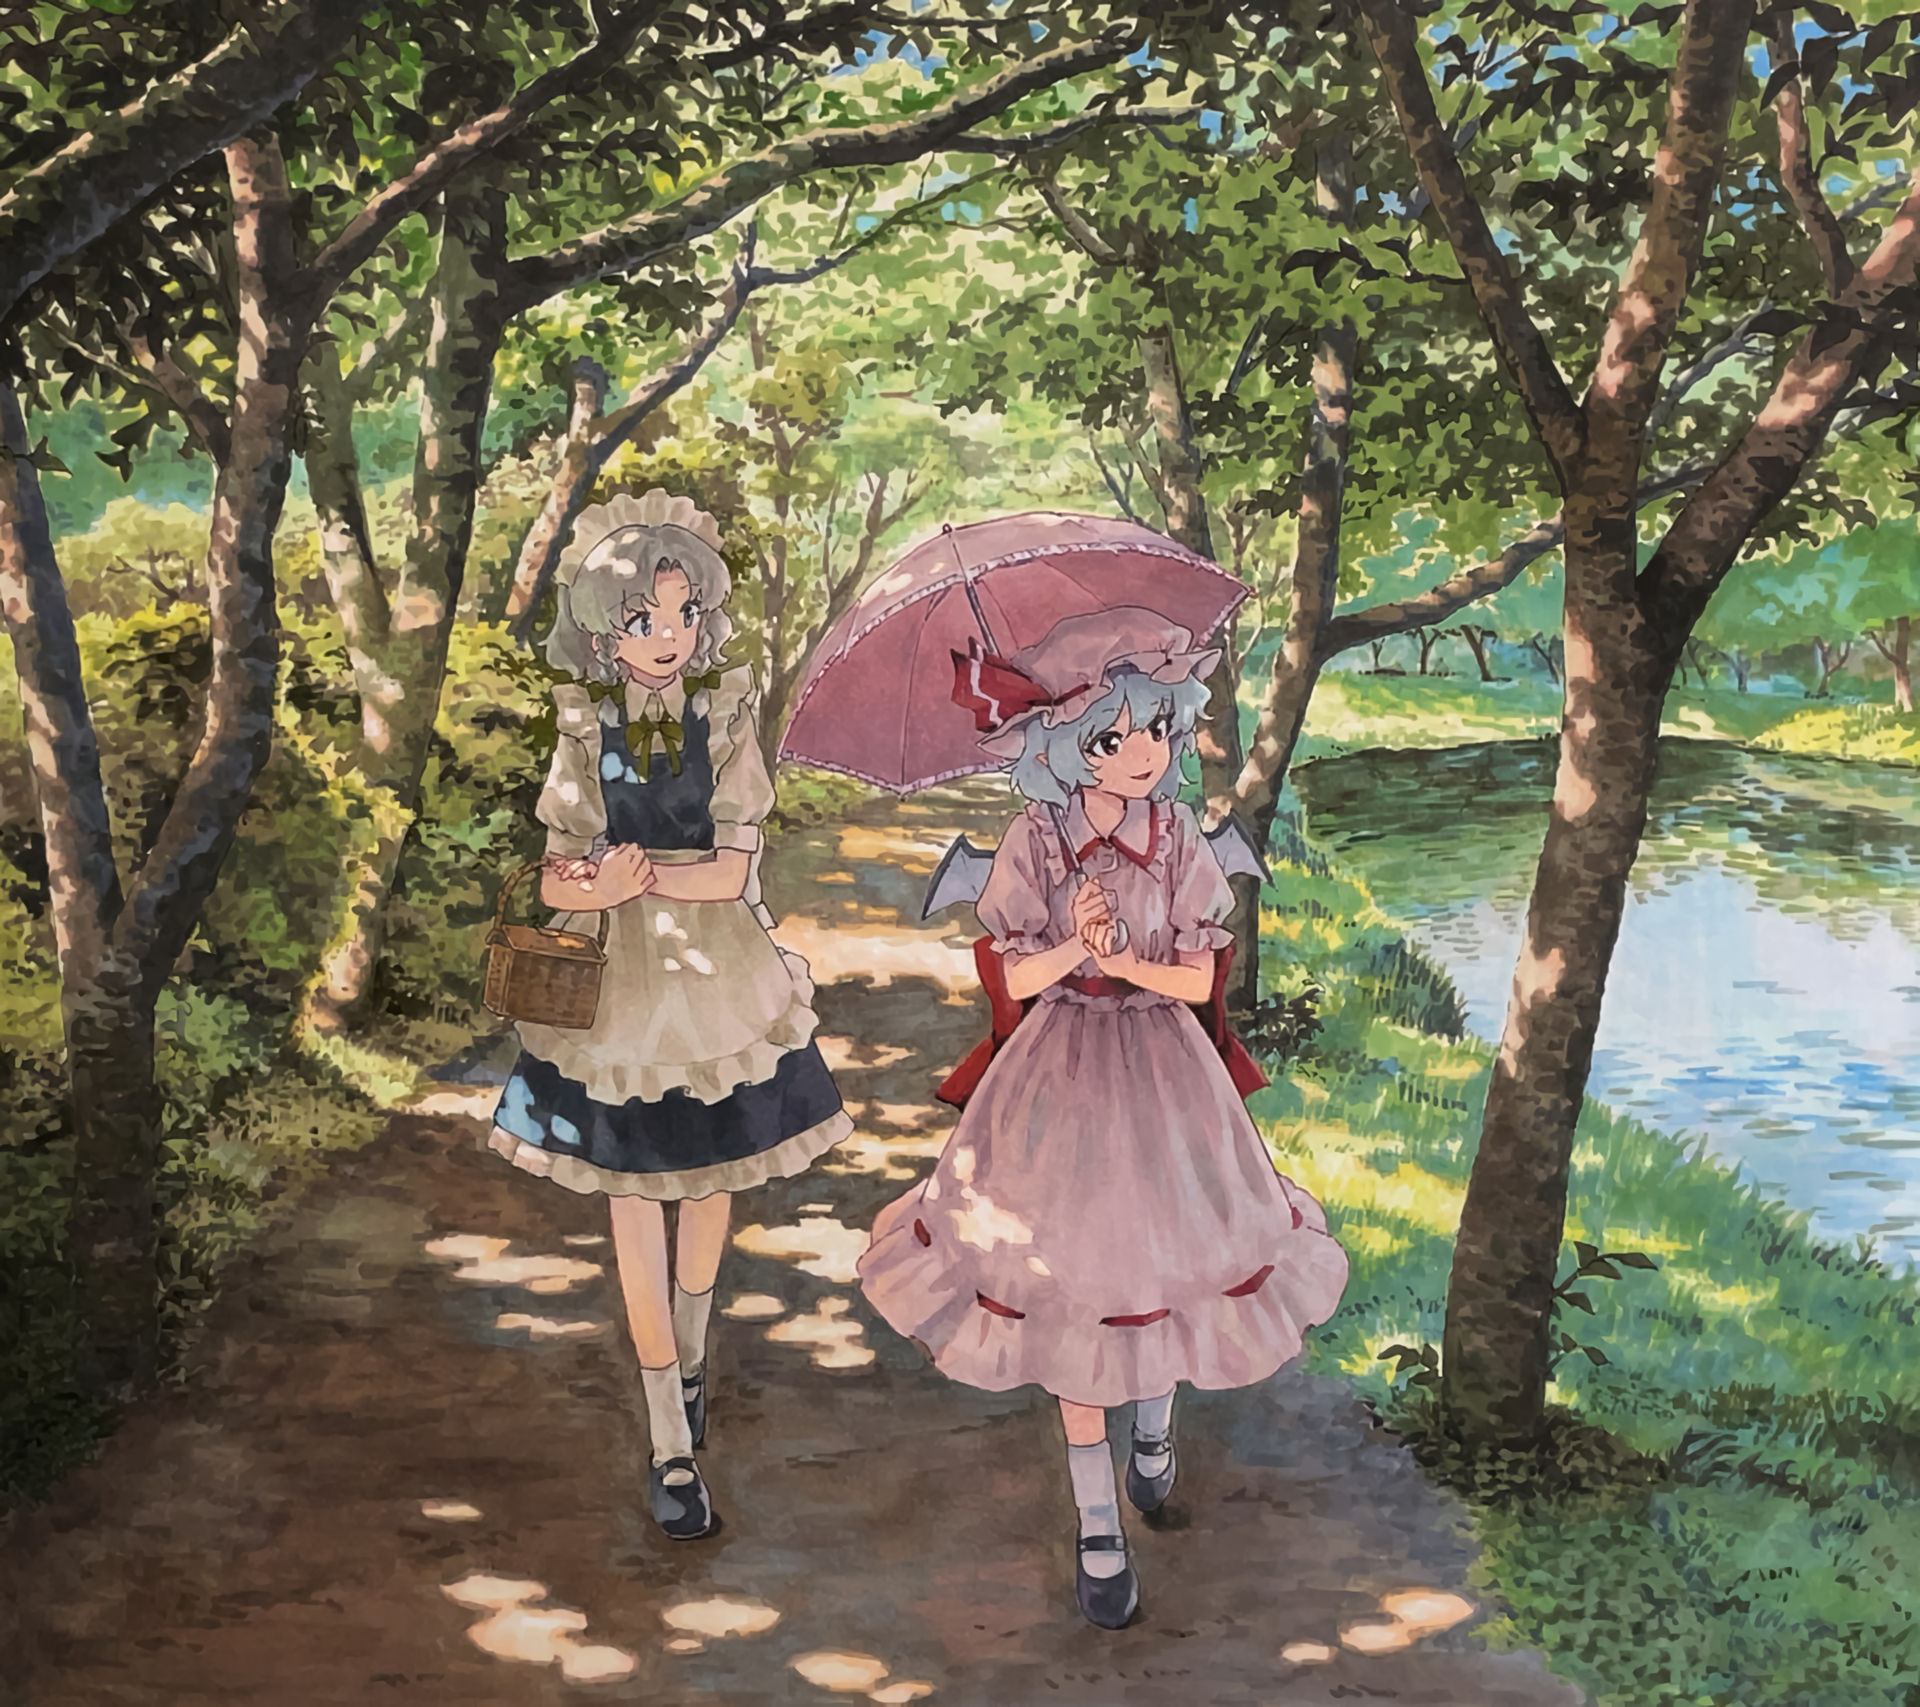 Anime 1920x1707 anime anime girls Touhou Izayoi Sakuya Remilia Scarlet trees path umbrella water dress maid maid outfit looking away hat sunlight